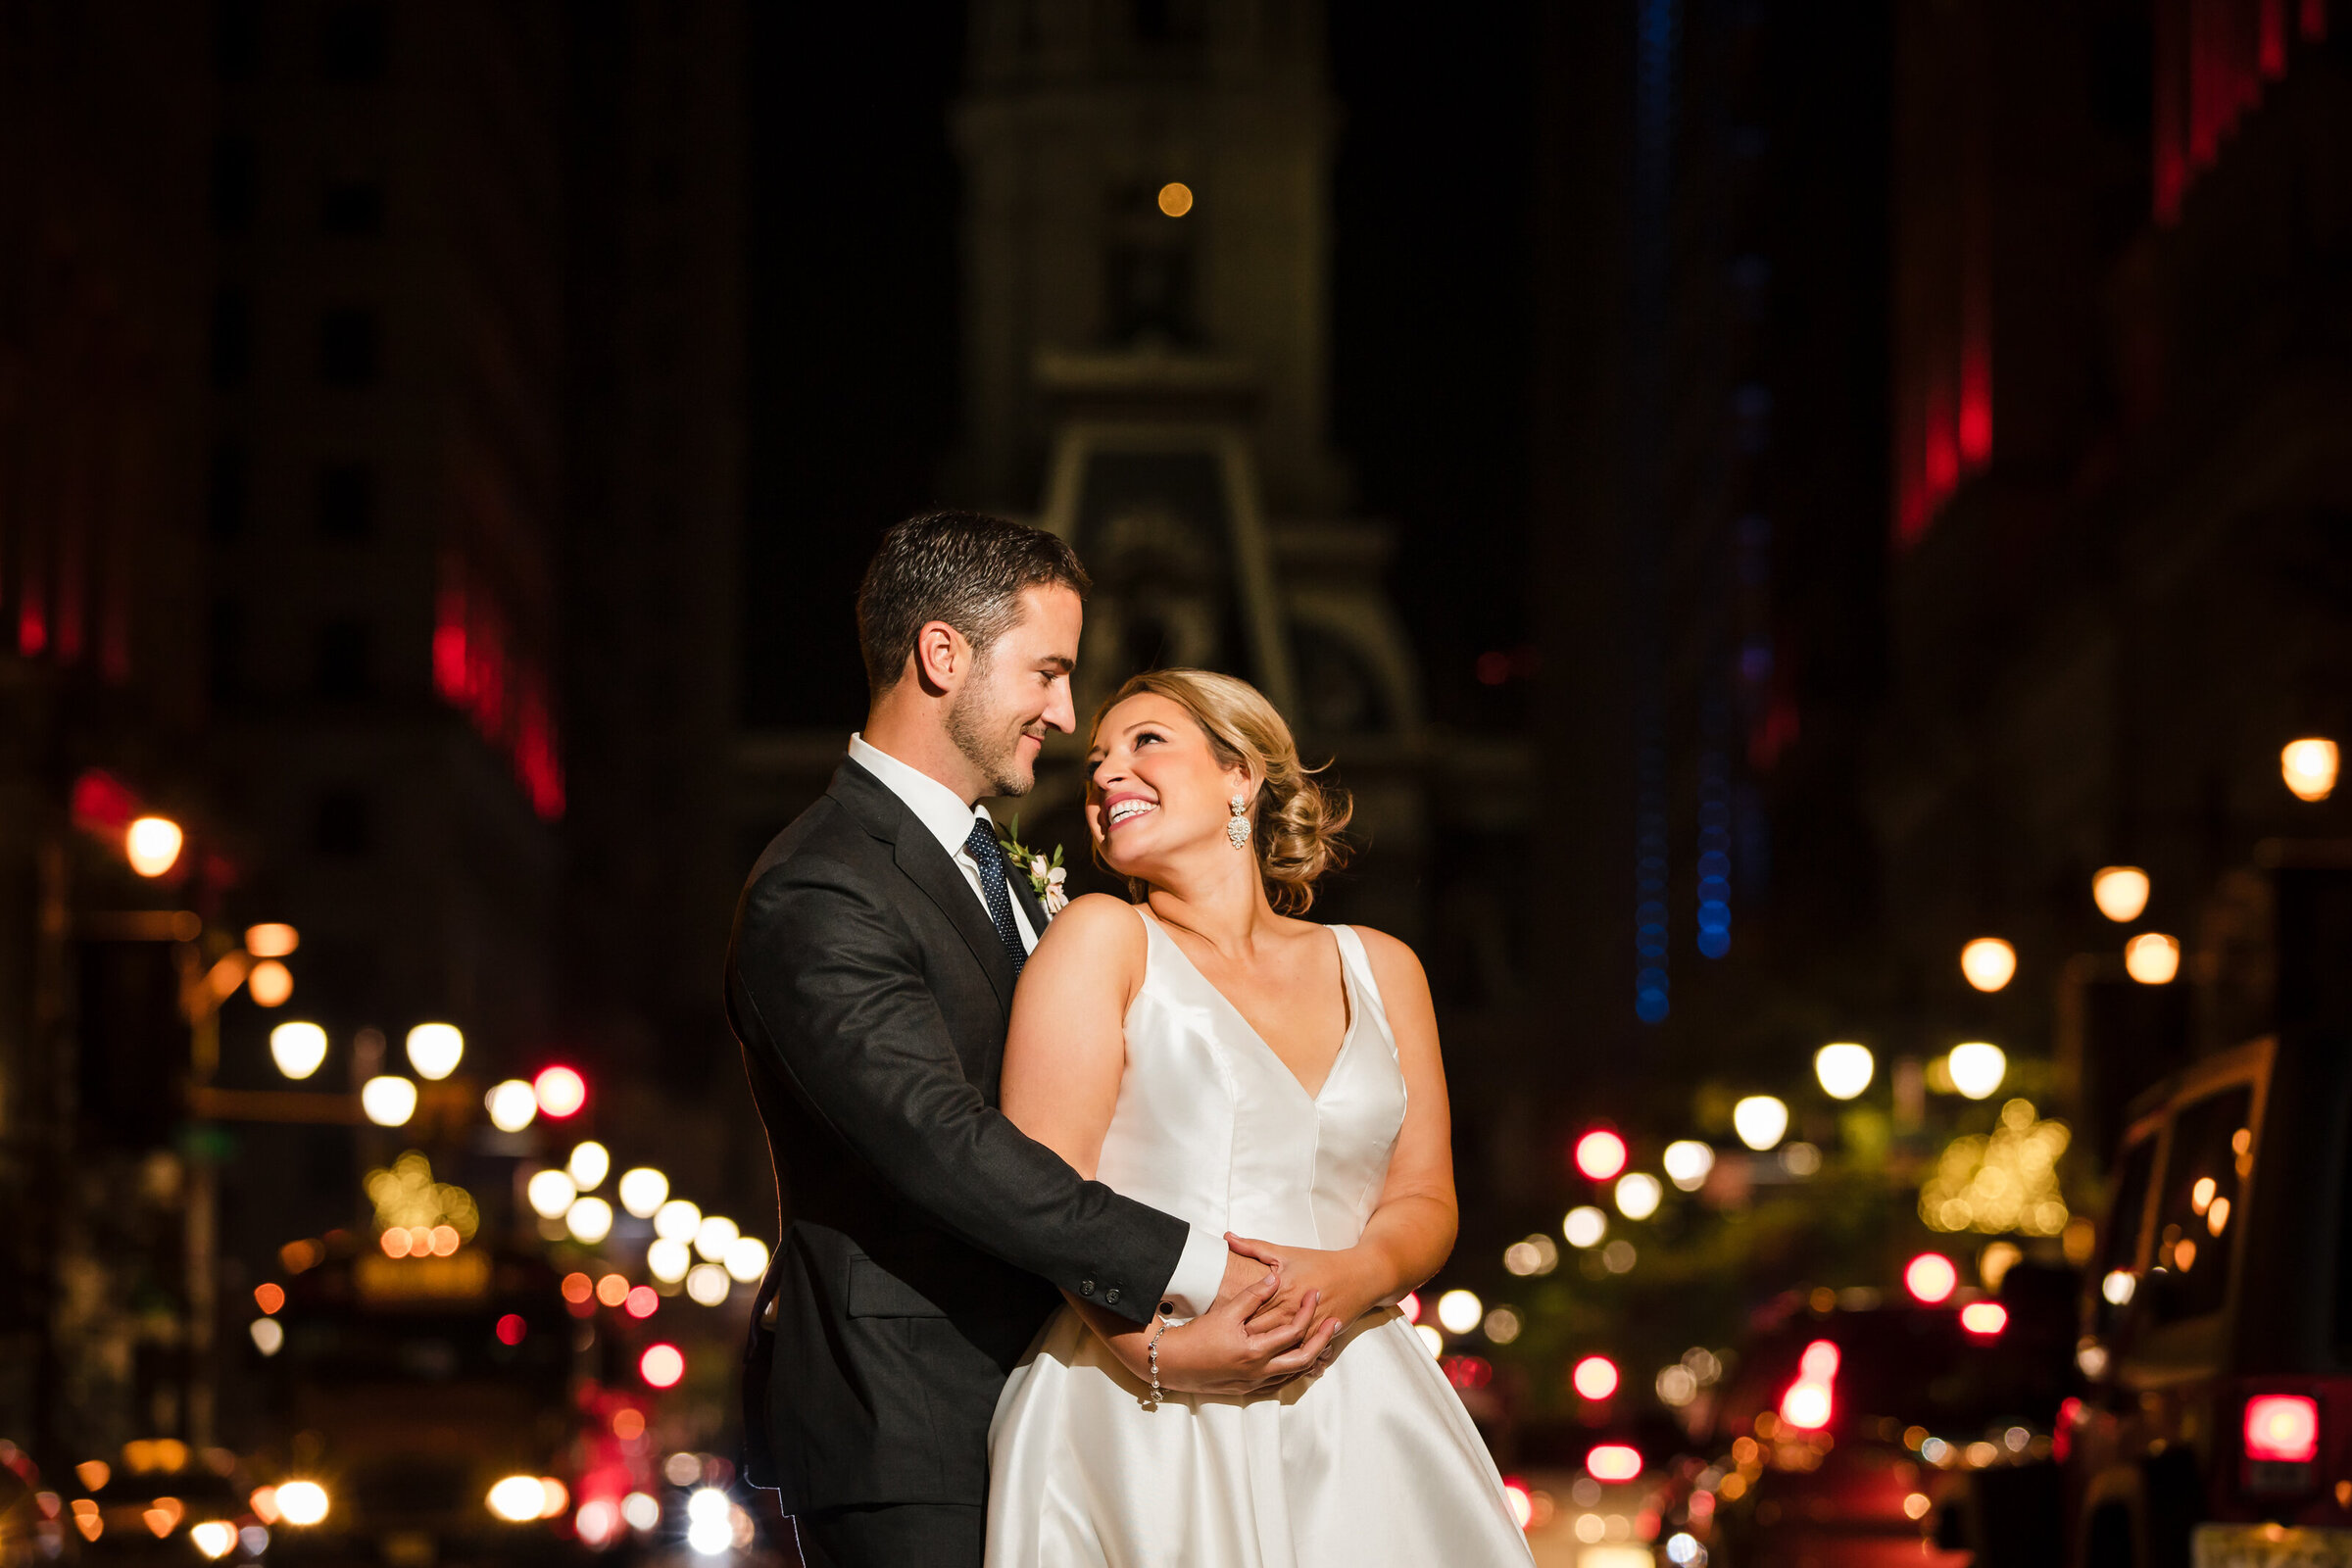 lucy-cescaphe-wedding-nighttime-broad-street-photo